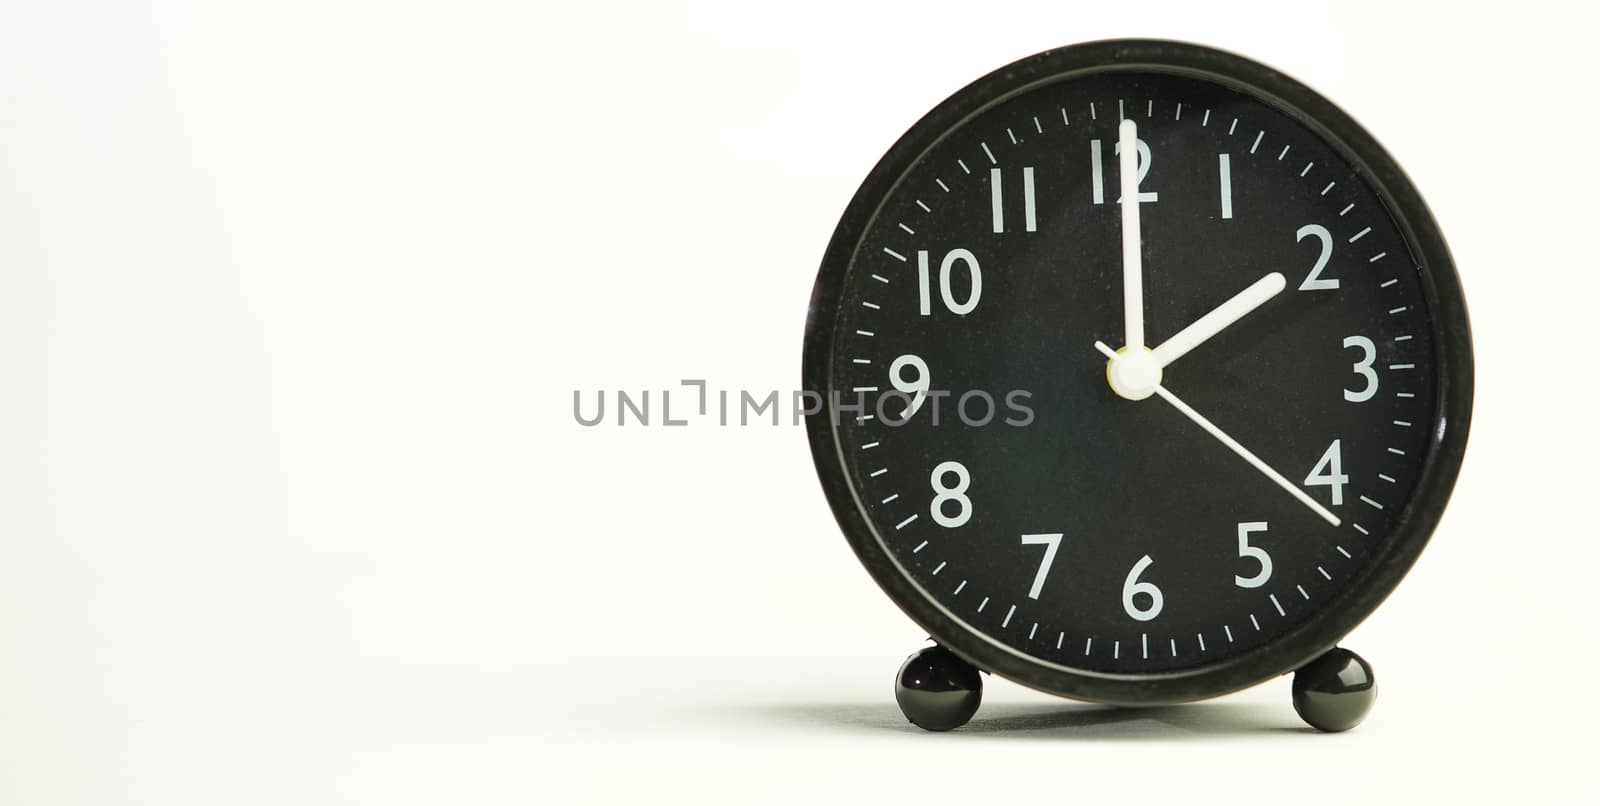 Decorative close-up black analog alarm clock for 2 o'clock, sepa by noppha80